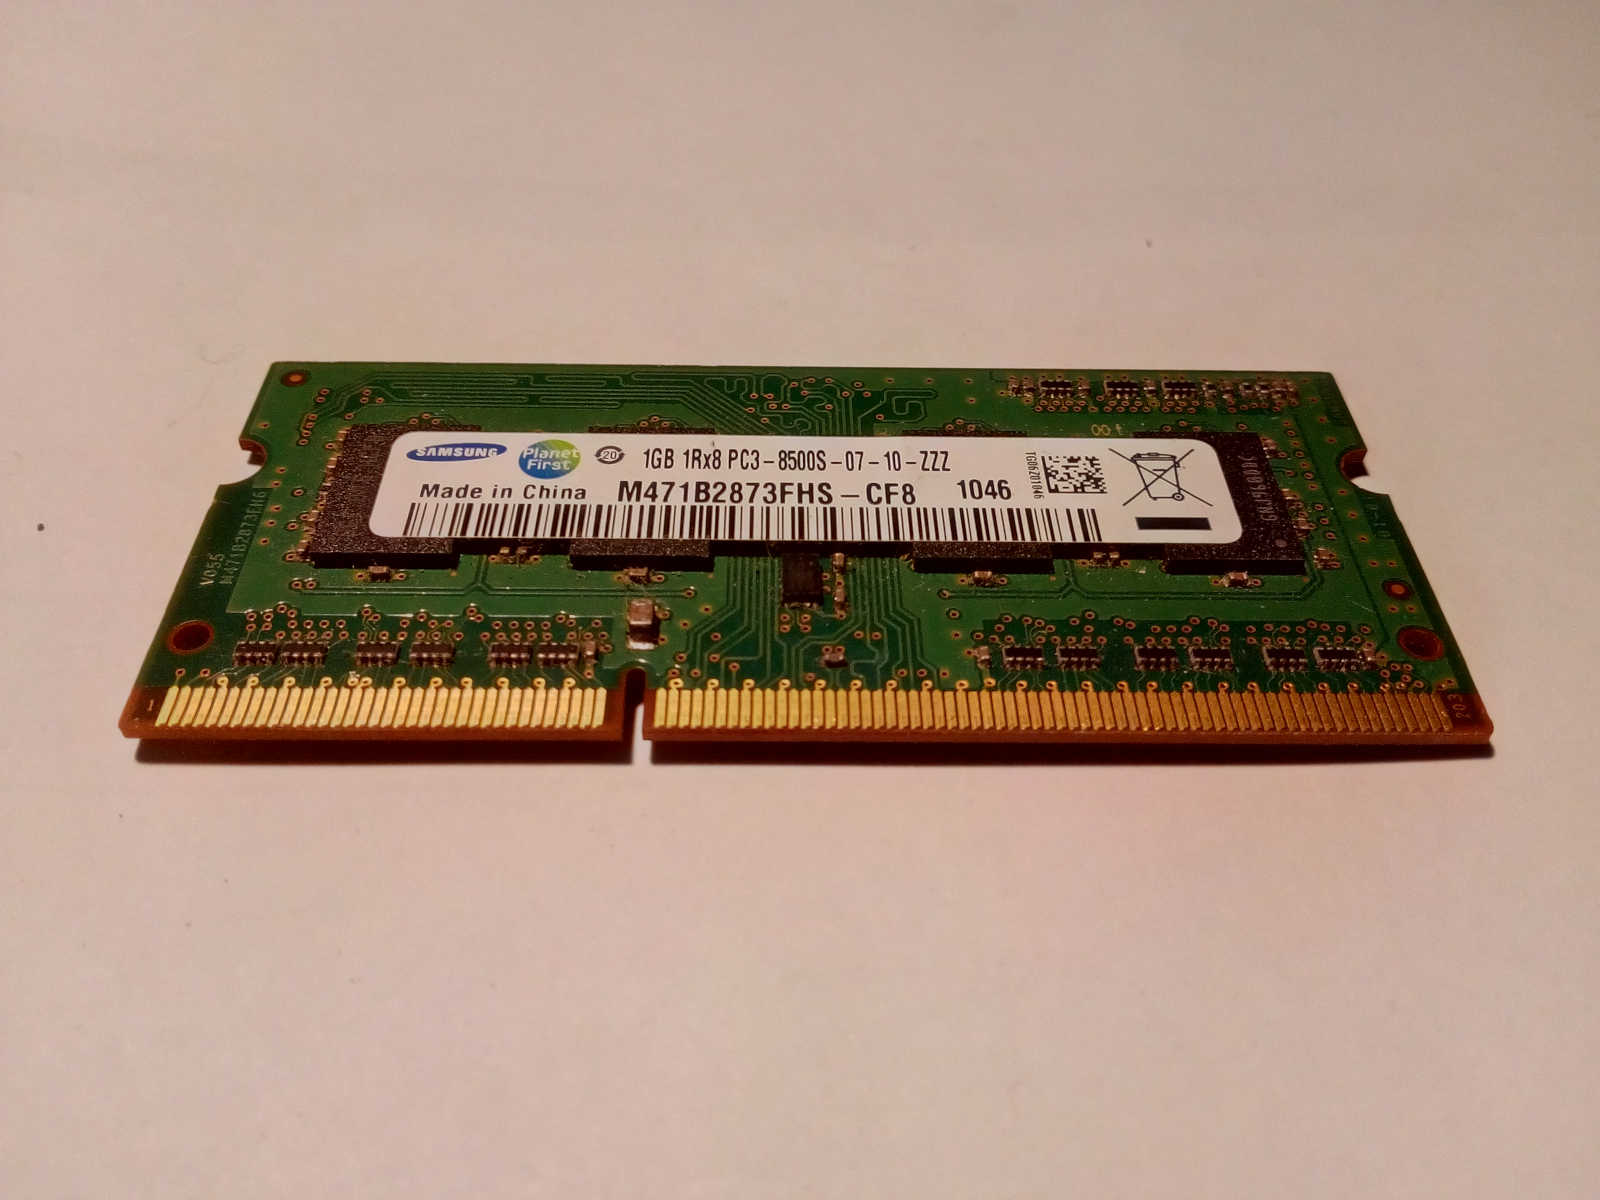 M471B2873FHS-CF8 RAM Portable Samsung DDR3 1Gb non ECC PC3-8500S, CL7 1066MHz 1.5V (+/-0.075)sans halogène ni plomb, garantie 2 ans.